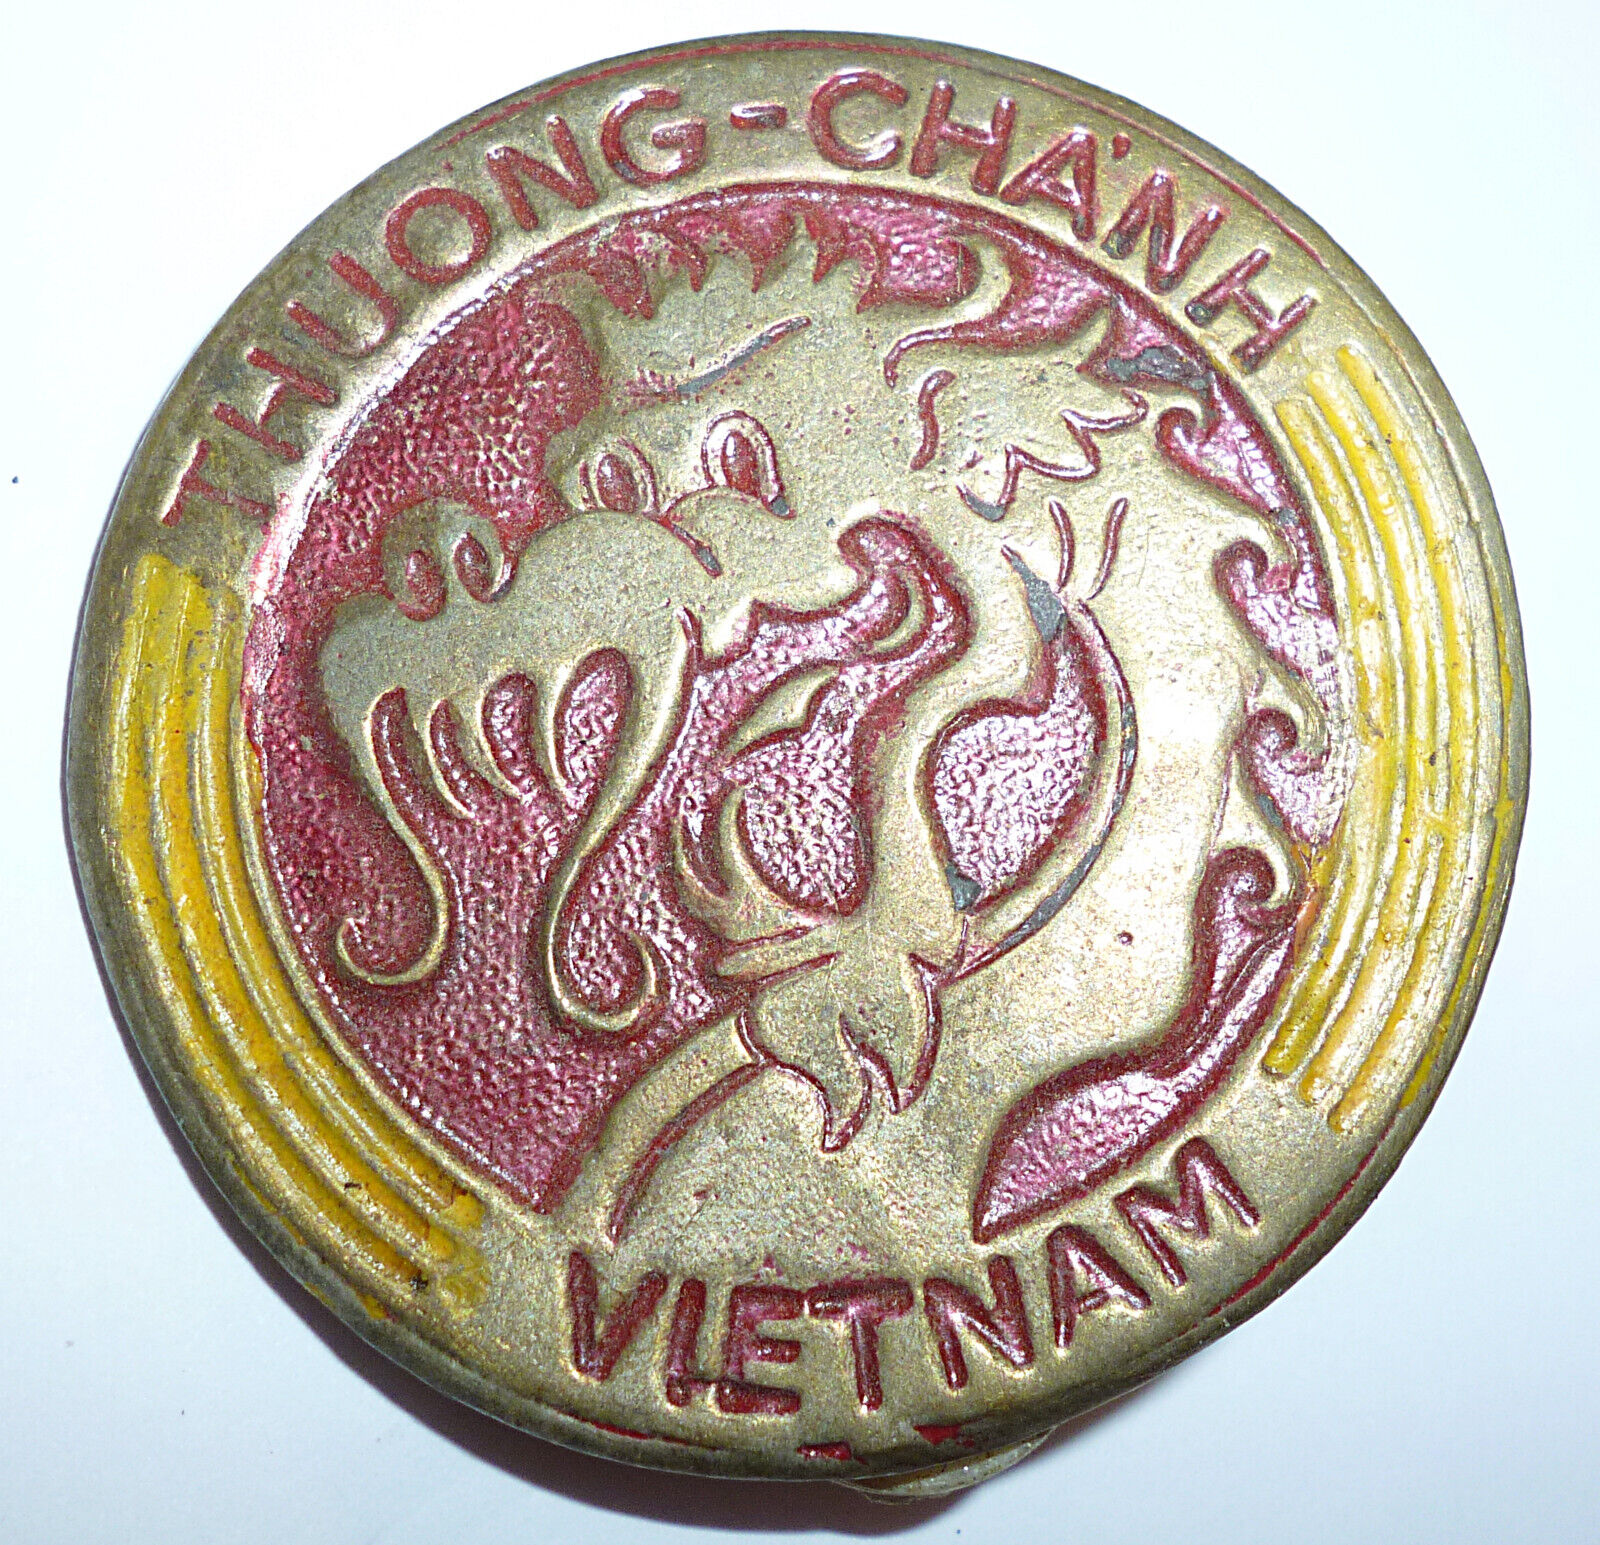 CUSTOMS - Badge - BORDER FORCE - RVN SAIGON - Thuong Chanh - Vietnam War - B.509